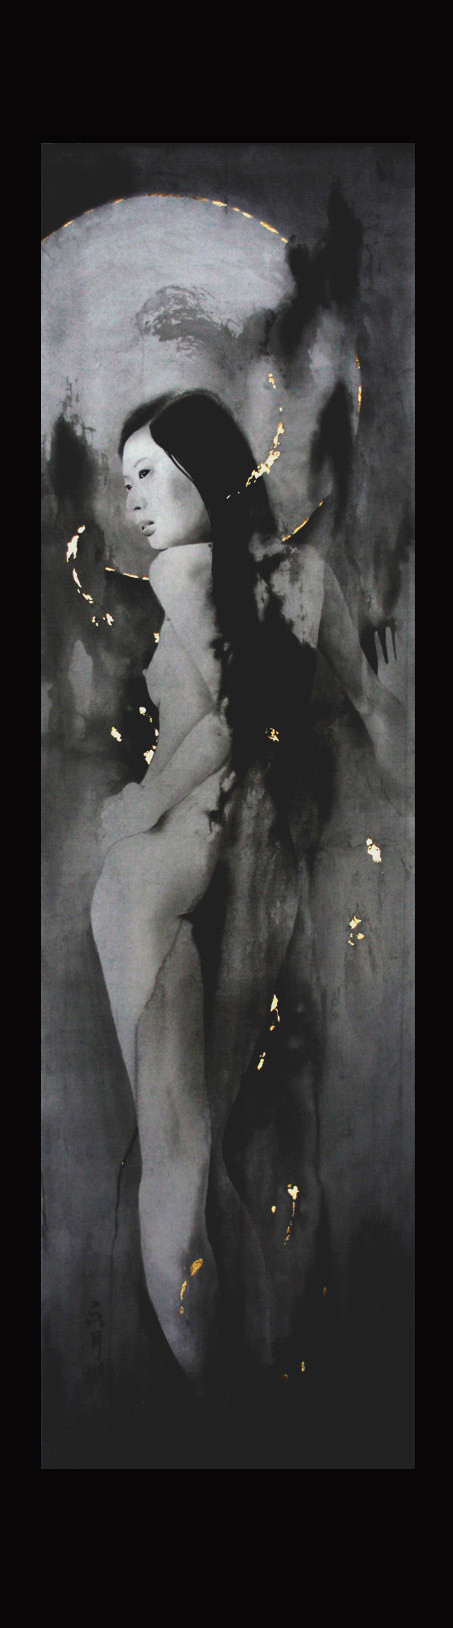 Muse of darkness nude woman asian - atmospheric fantasy paintings in watercolor & ink by sebastian rutkowski - moonlight-art